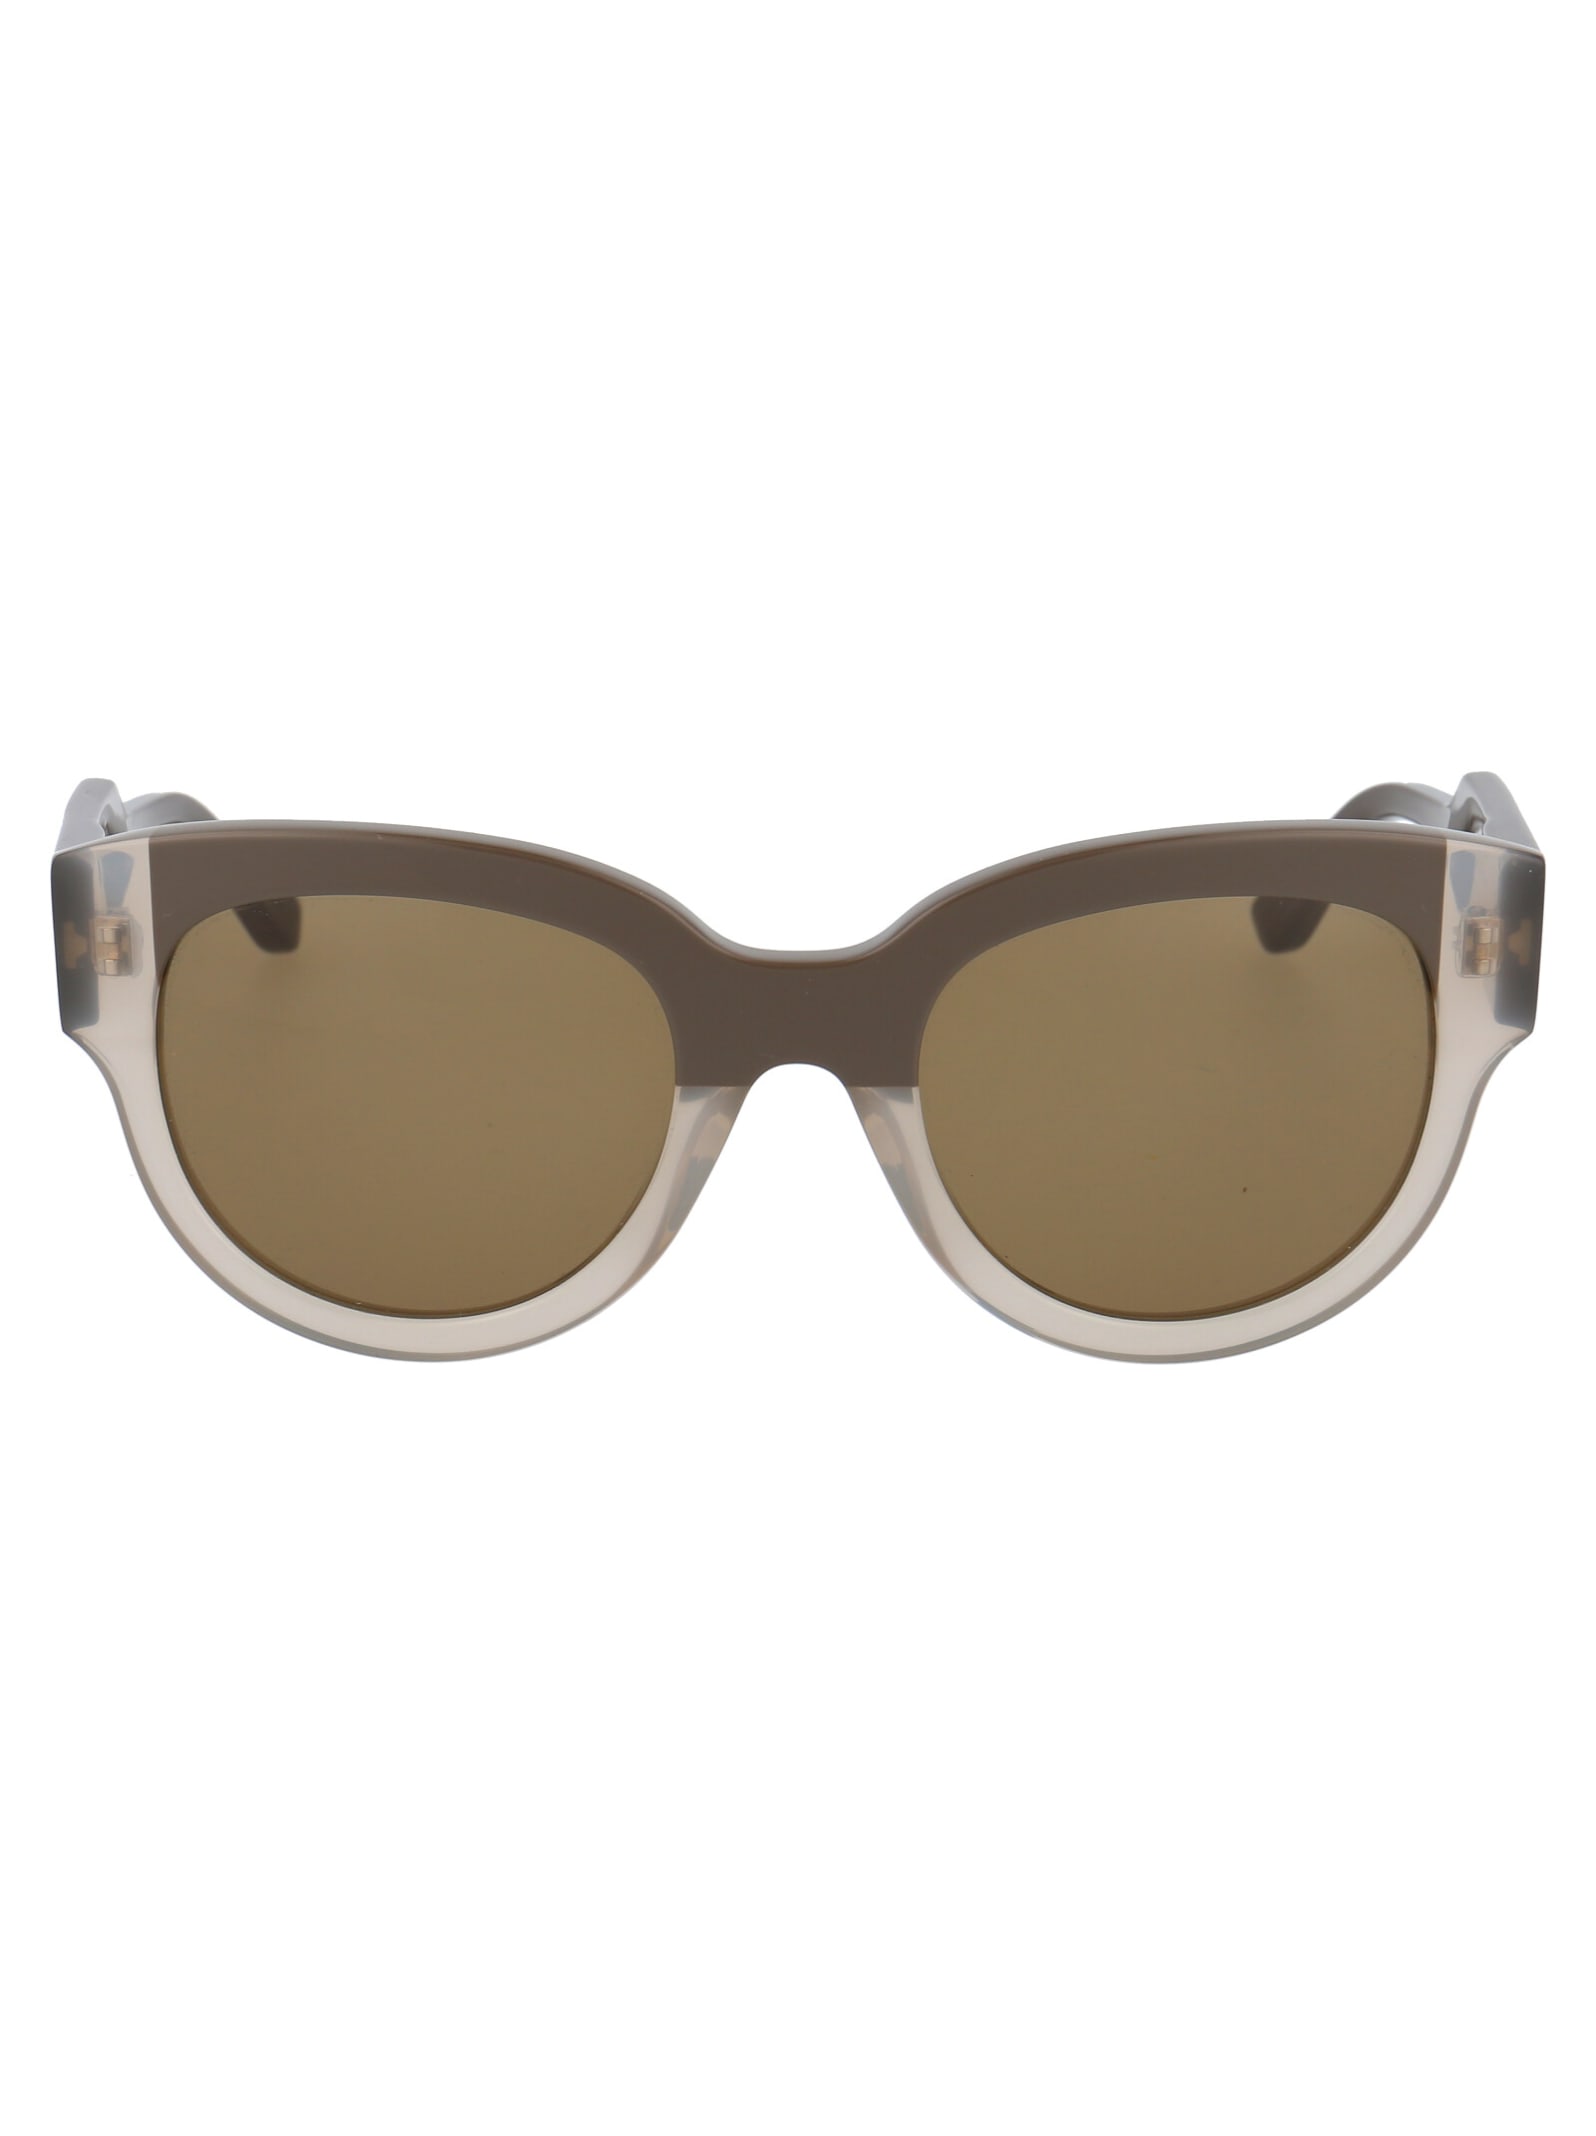 Marni Eyewear Me600s Sunglasses